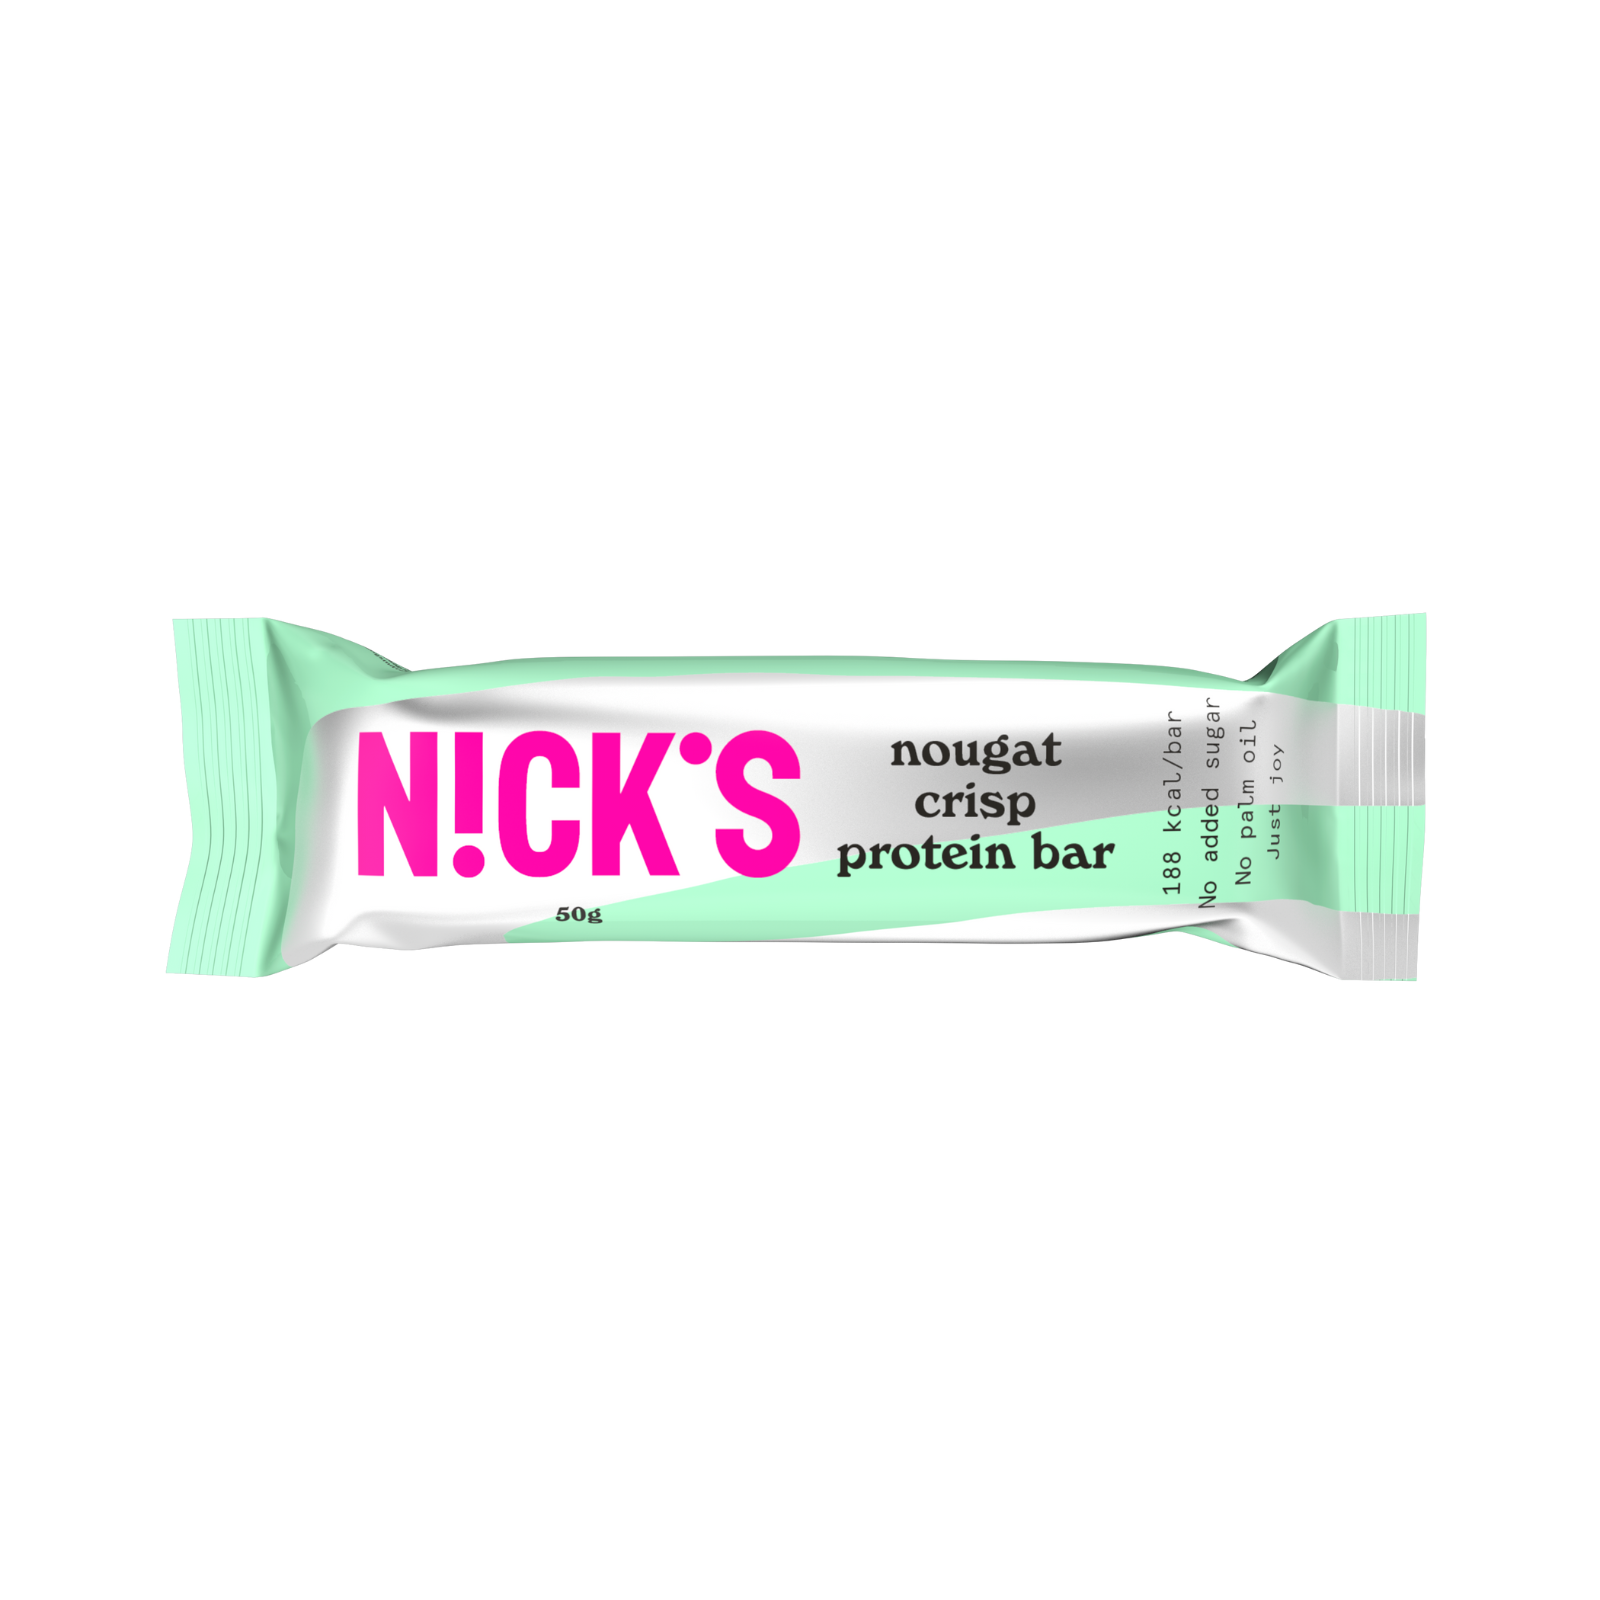 Nick's Protein bar nougat crisp